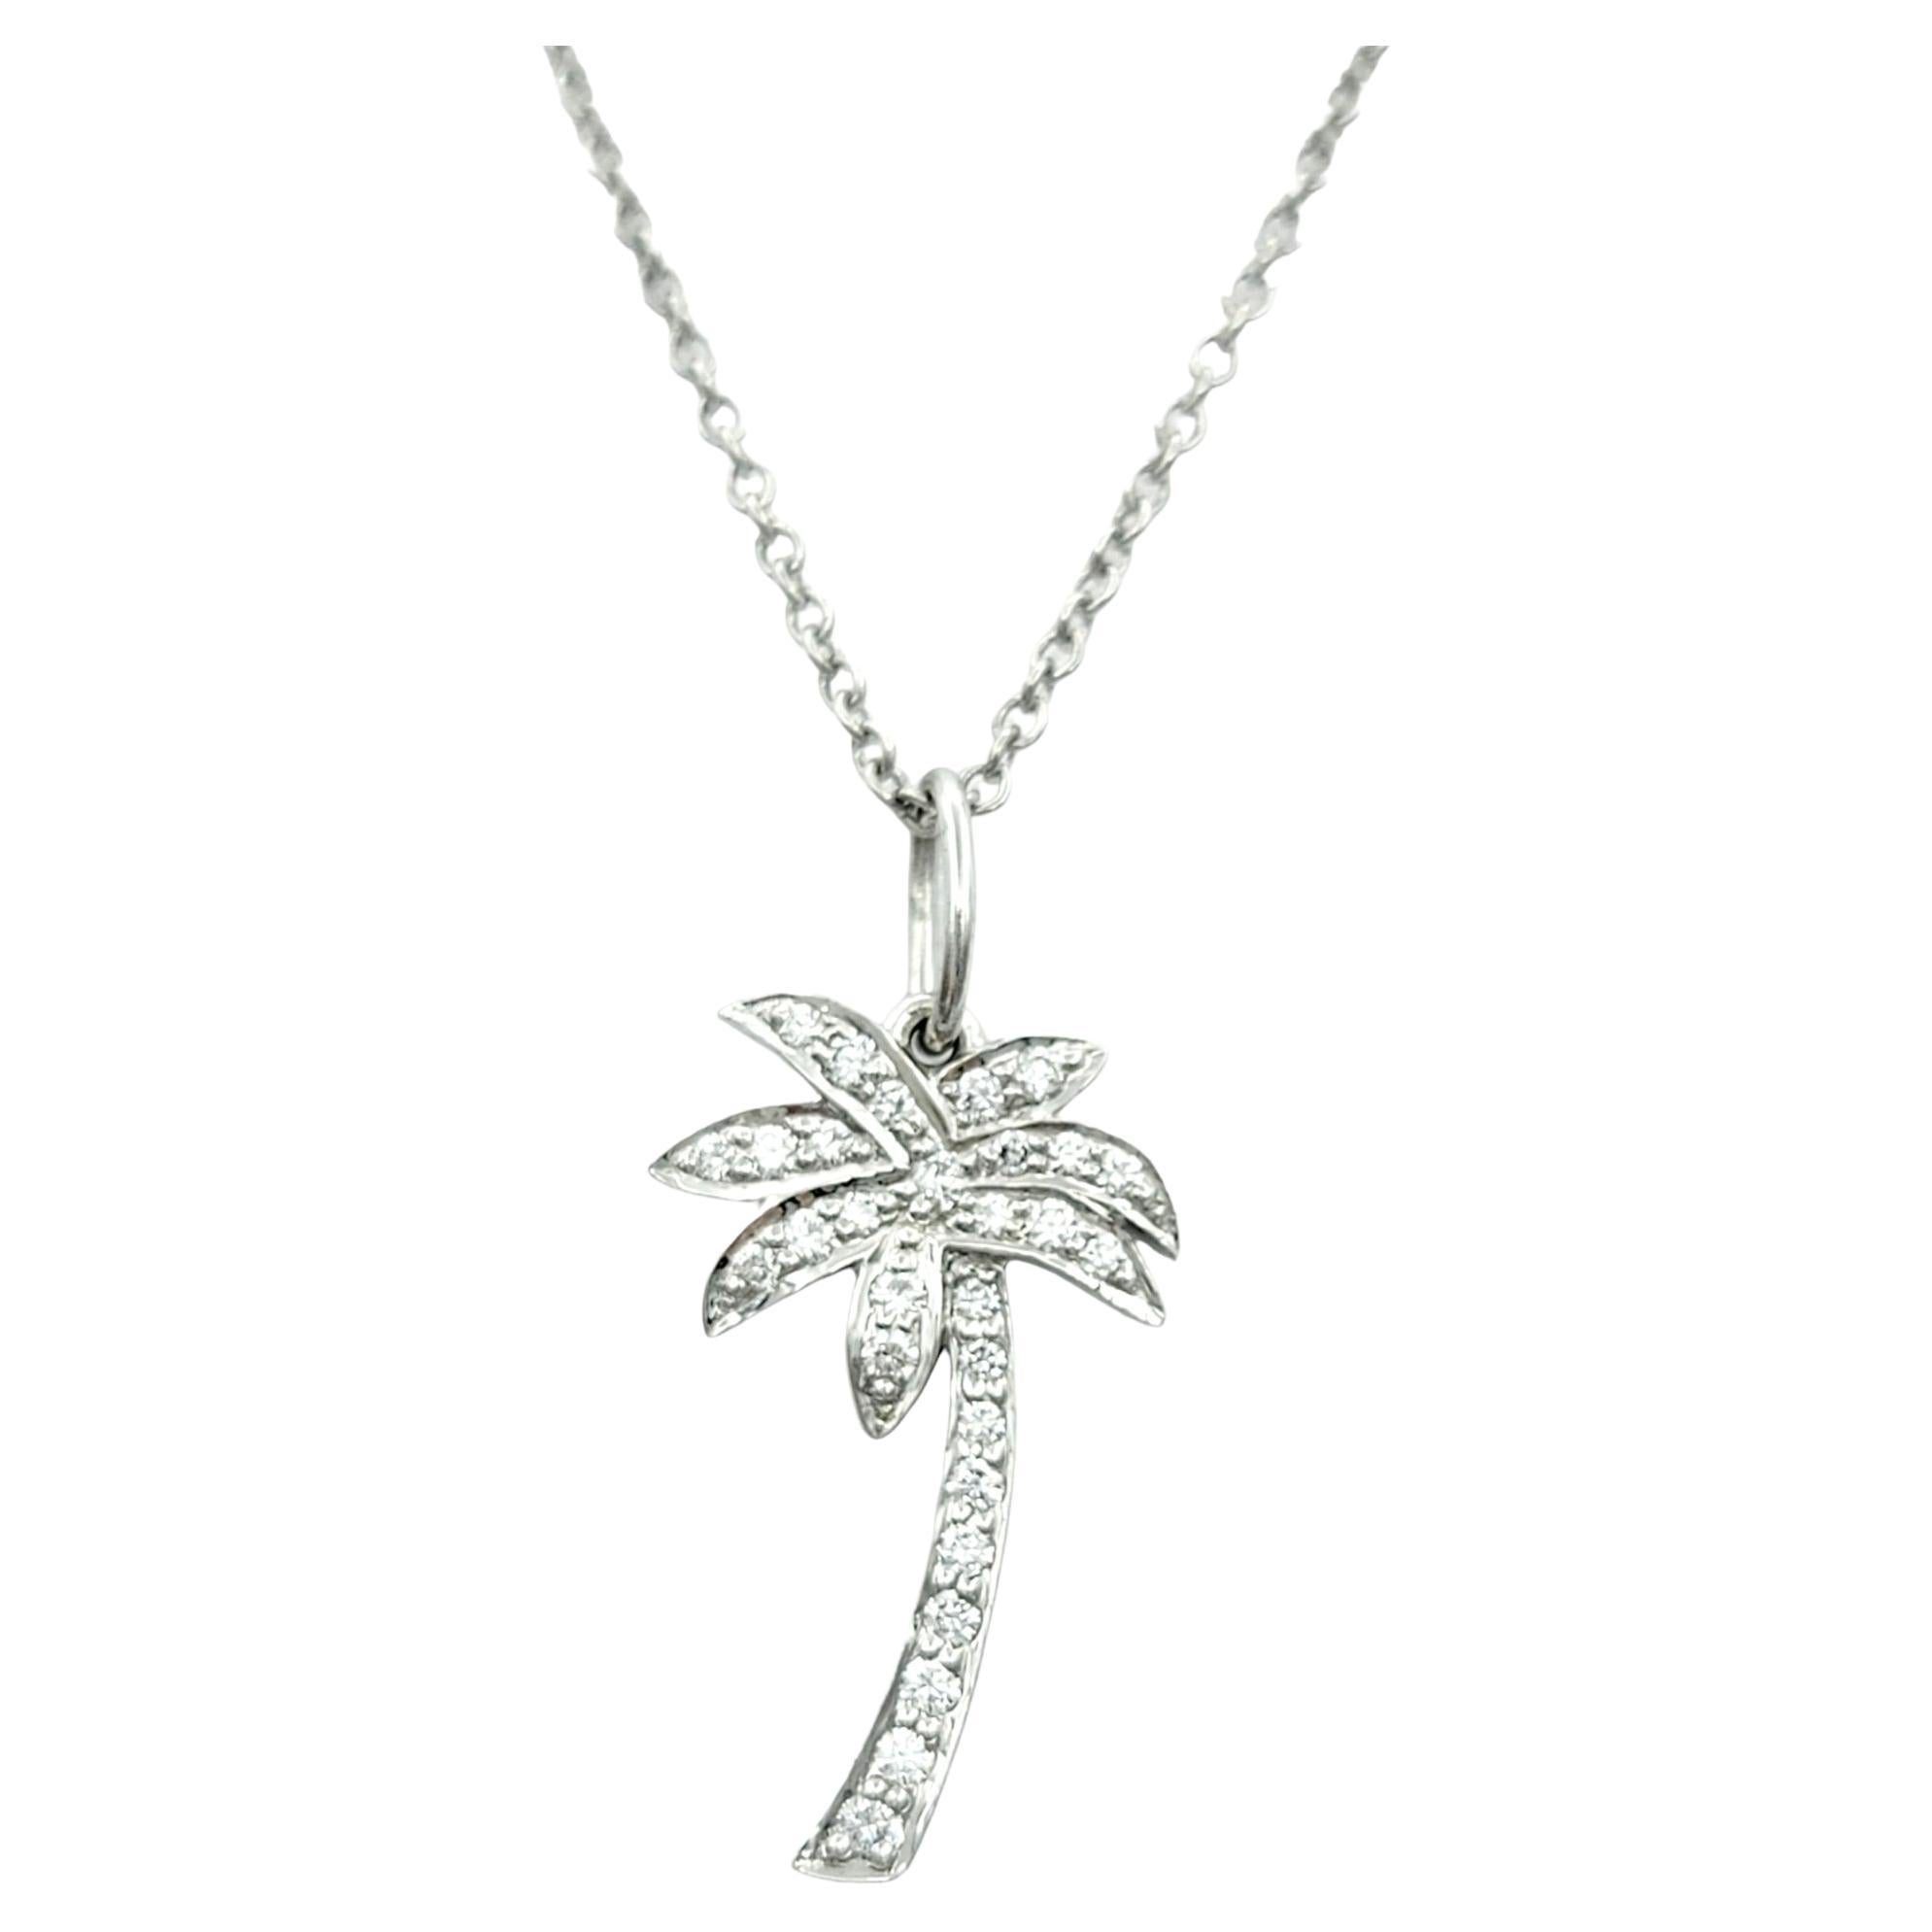 Tiffany & Co. Pave Diamond Palm Tree Motif Pendant Necklace Set in Platinum